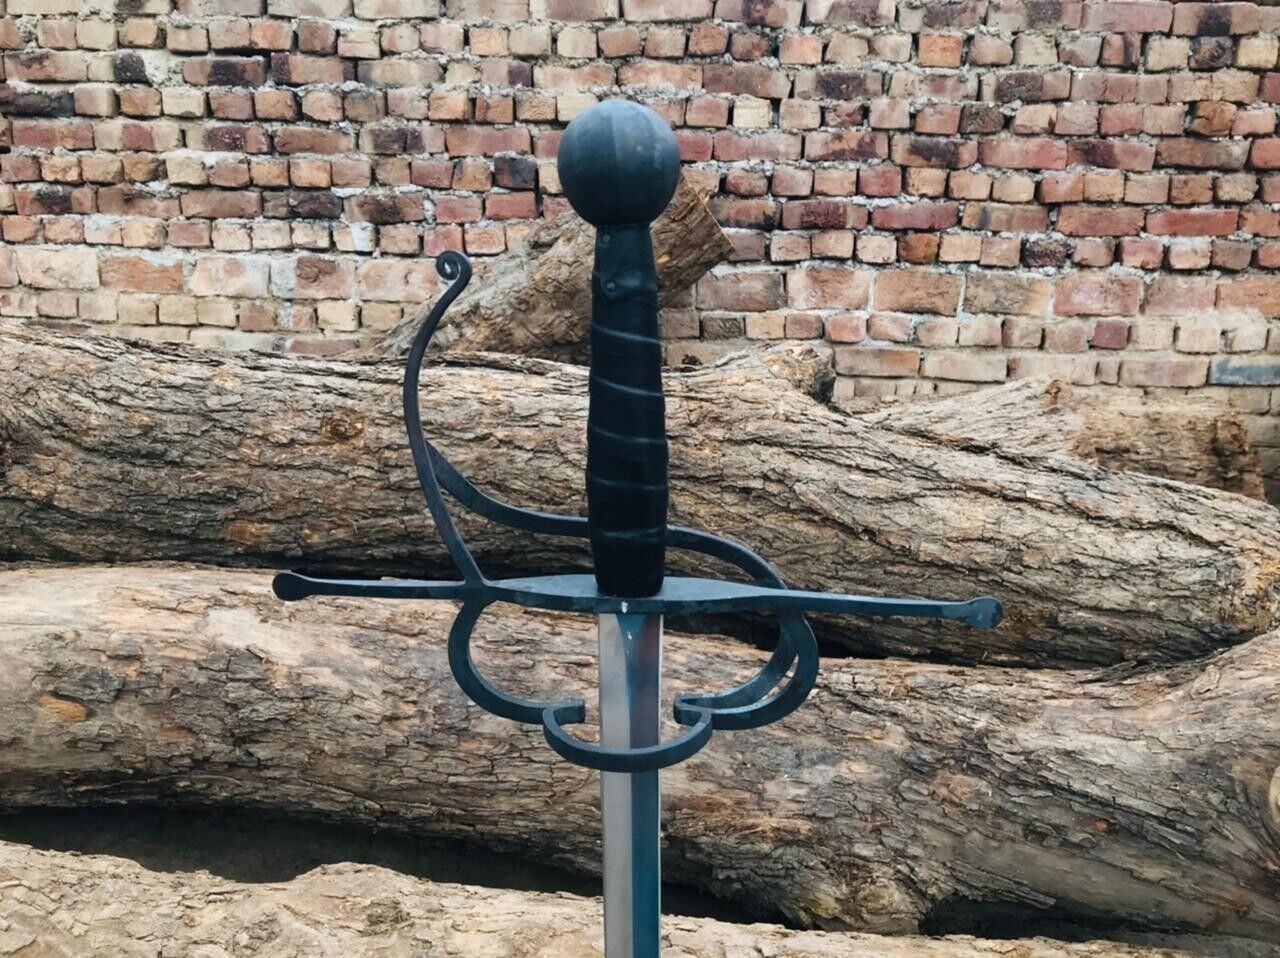 Custom Handmade Carbon Steel Medieval Standard Rapier Sword With Leather Sheath